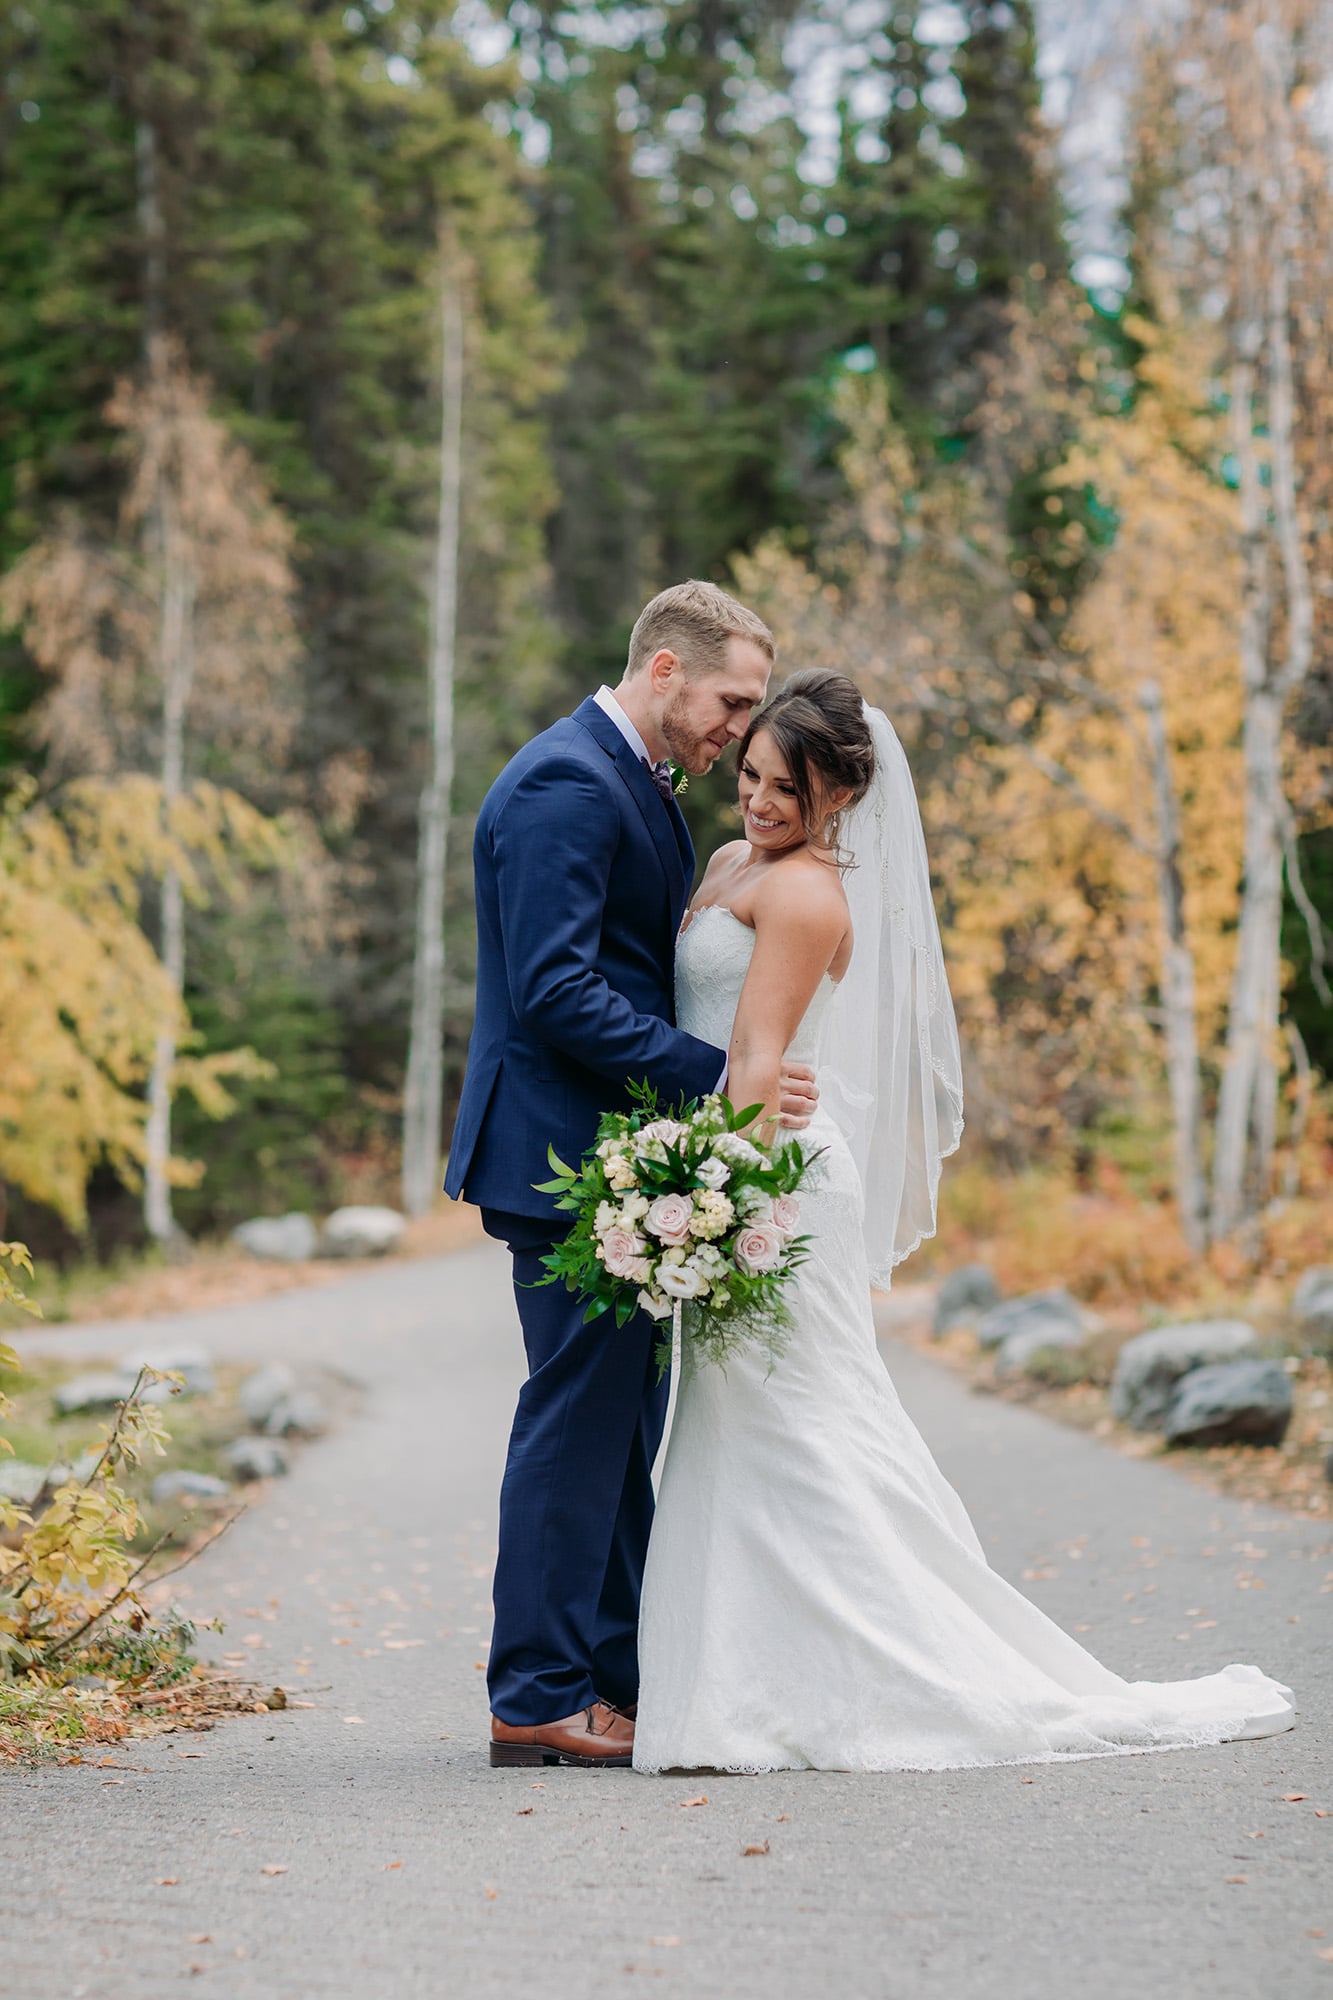 mountain elopement emerald lake lodge bride groom photos cabins